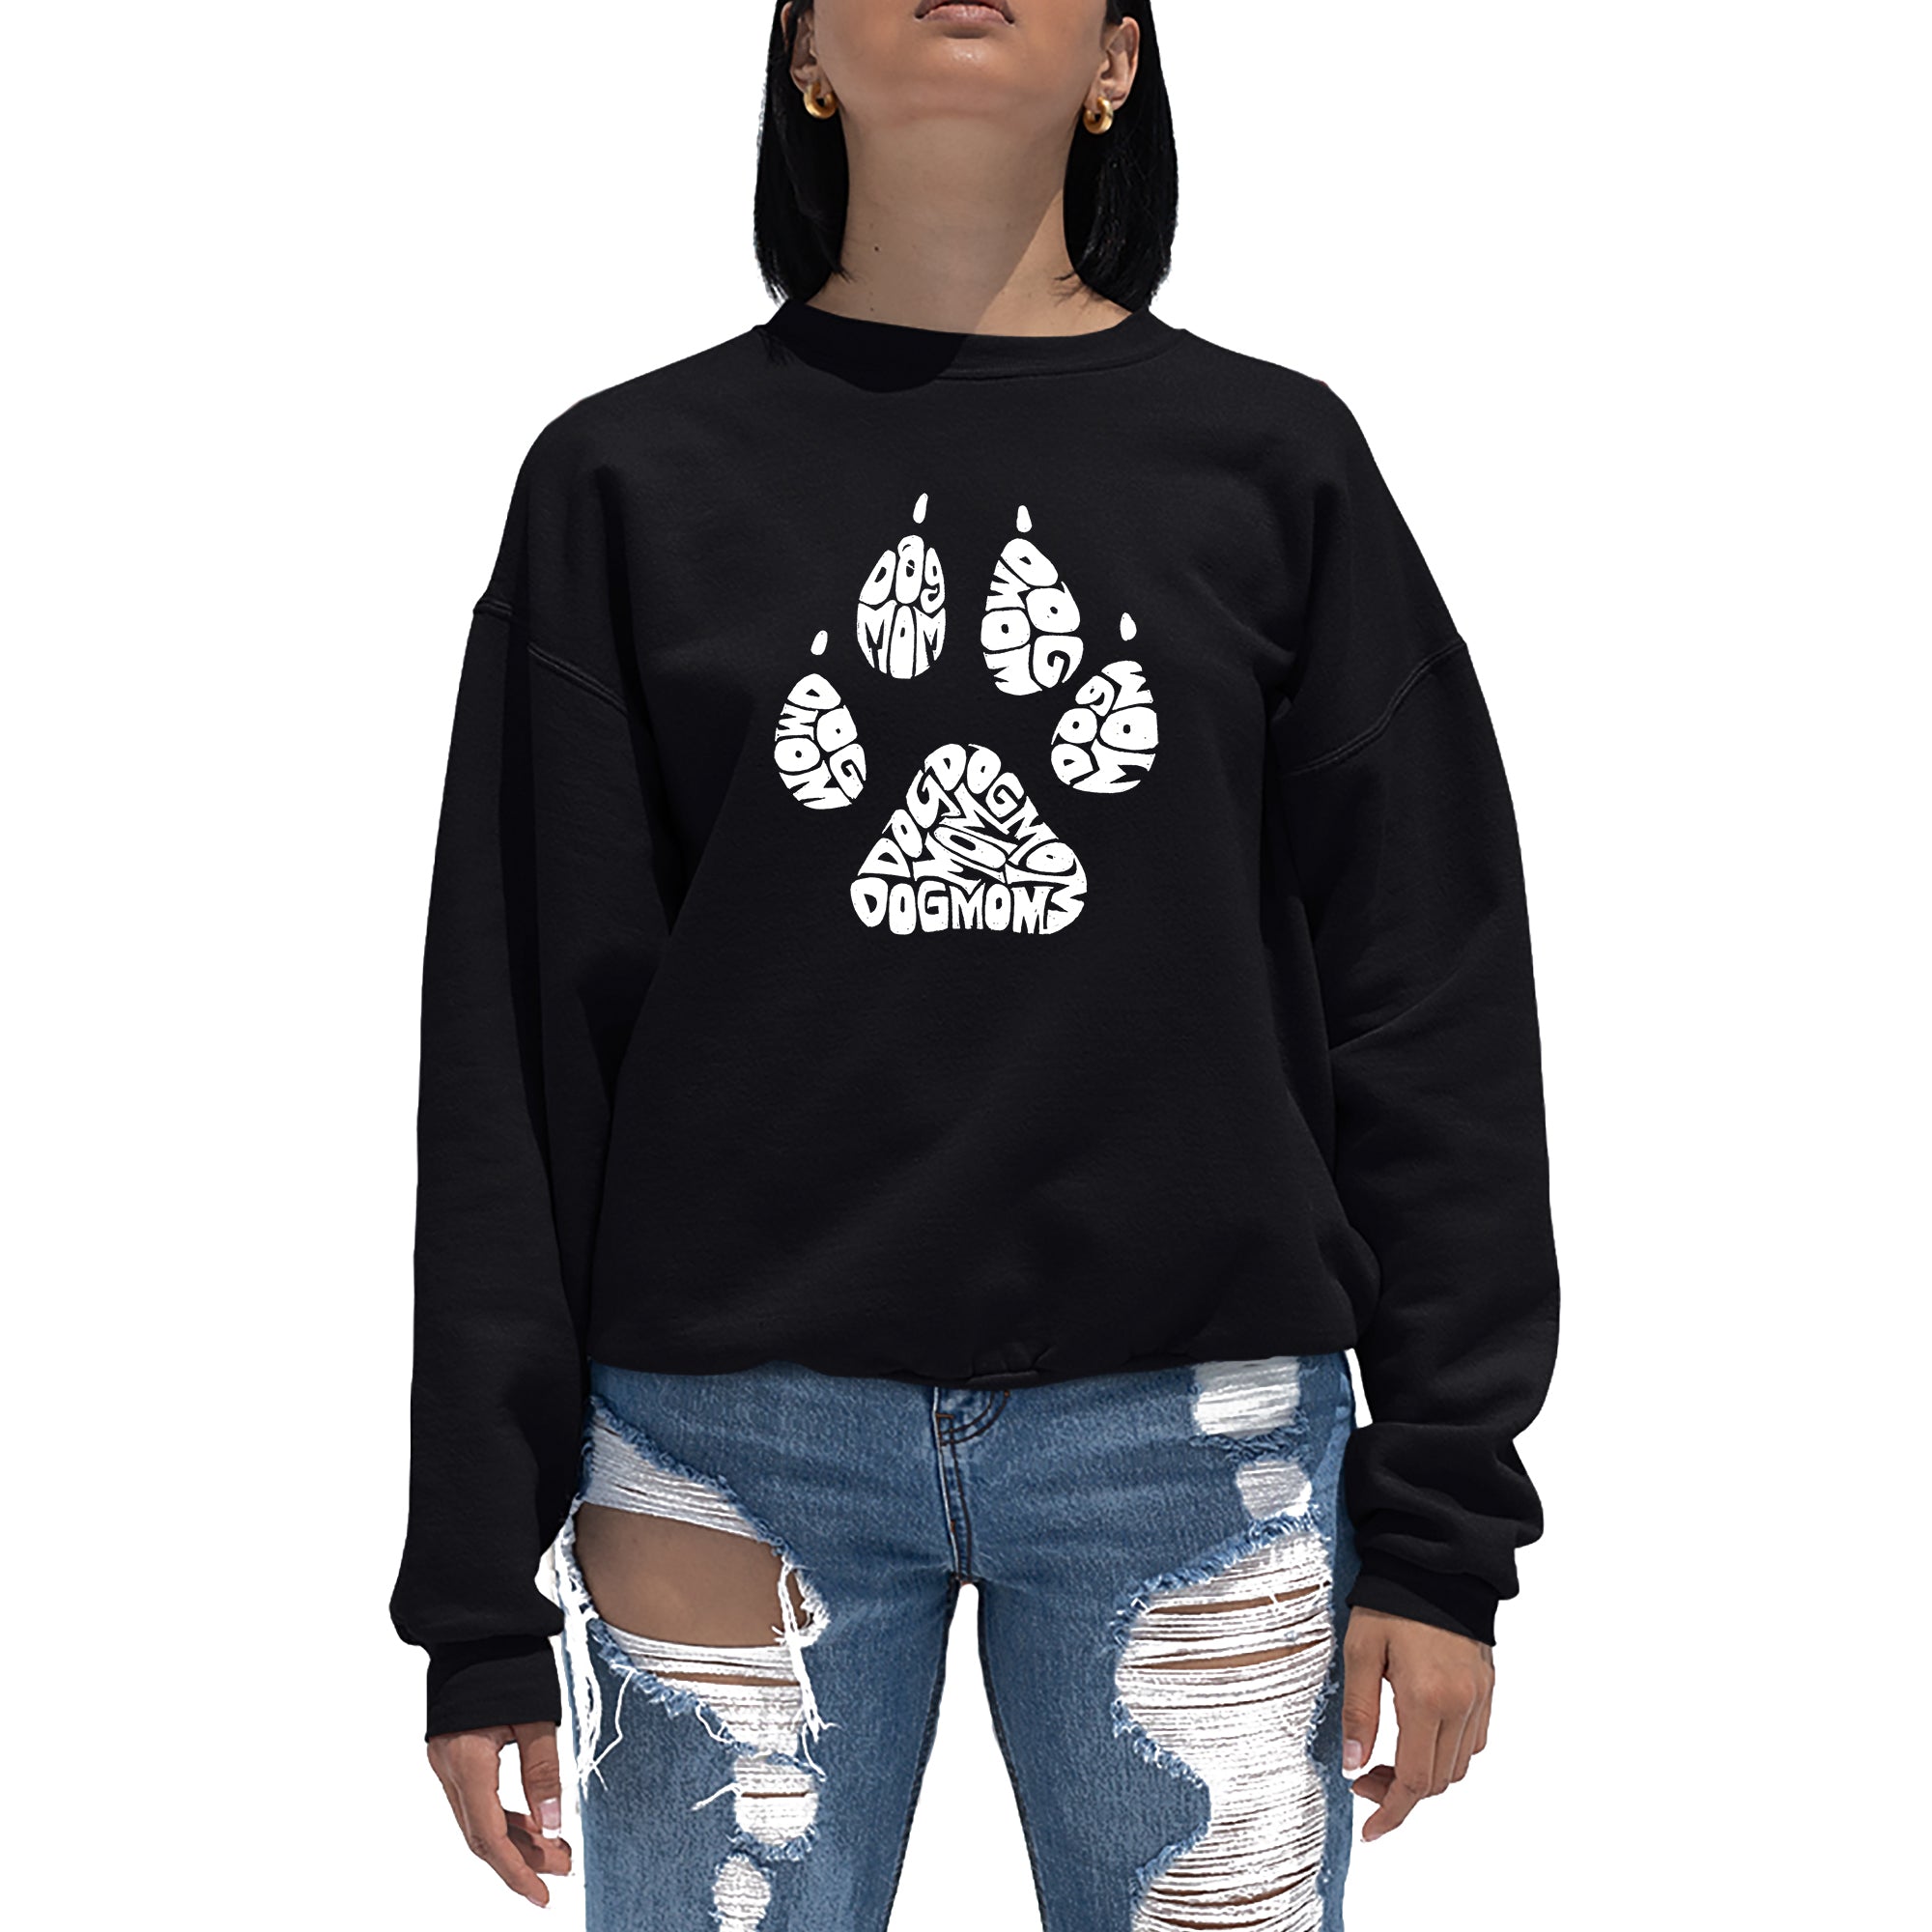 Dog Mom - Women's Word Art Crewneck Sweatshirt - Black - XXXX-Large